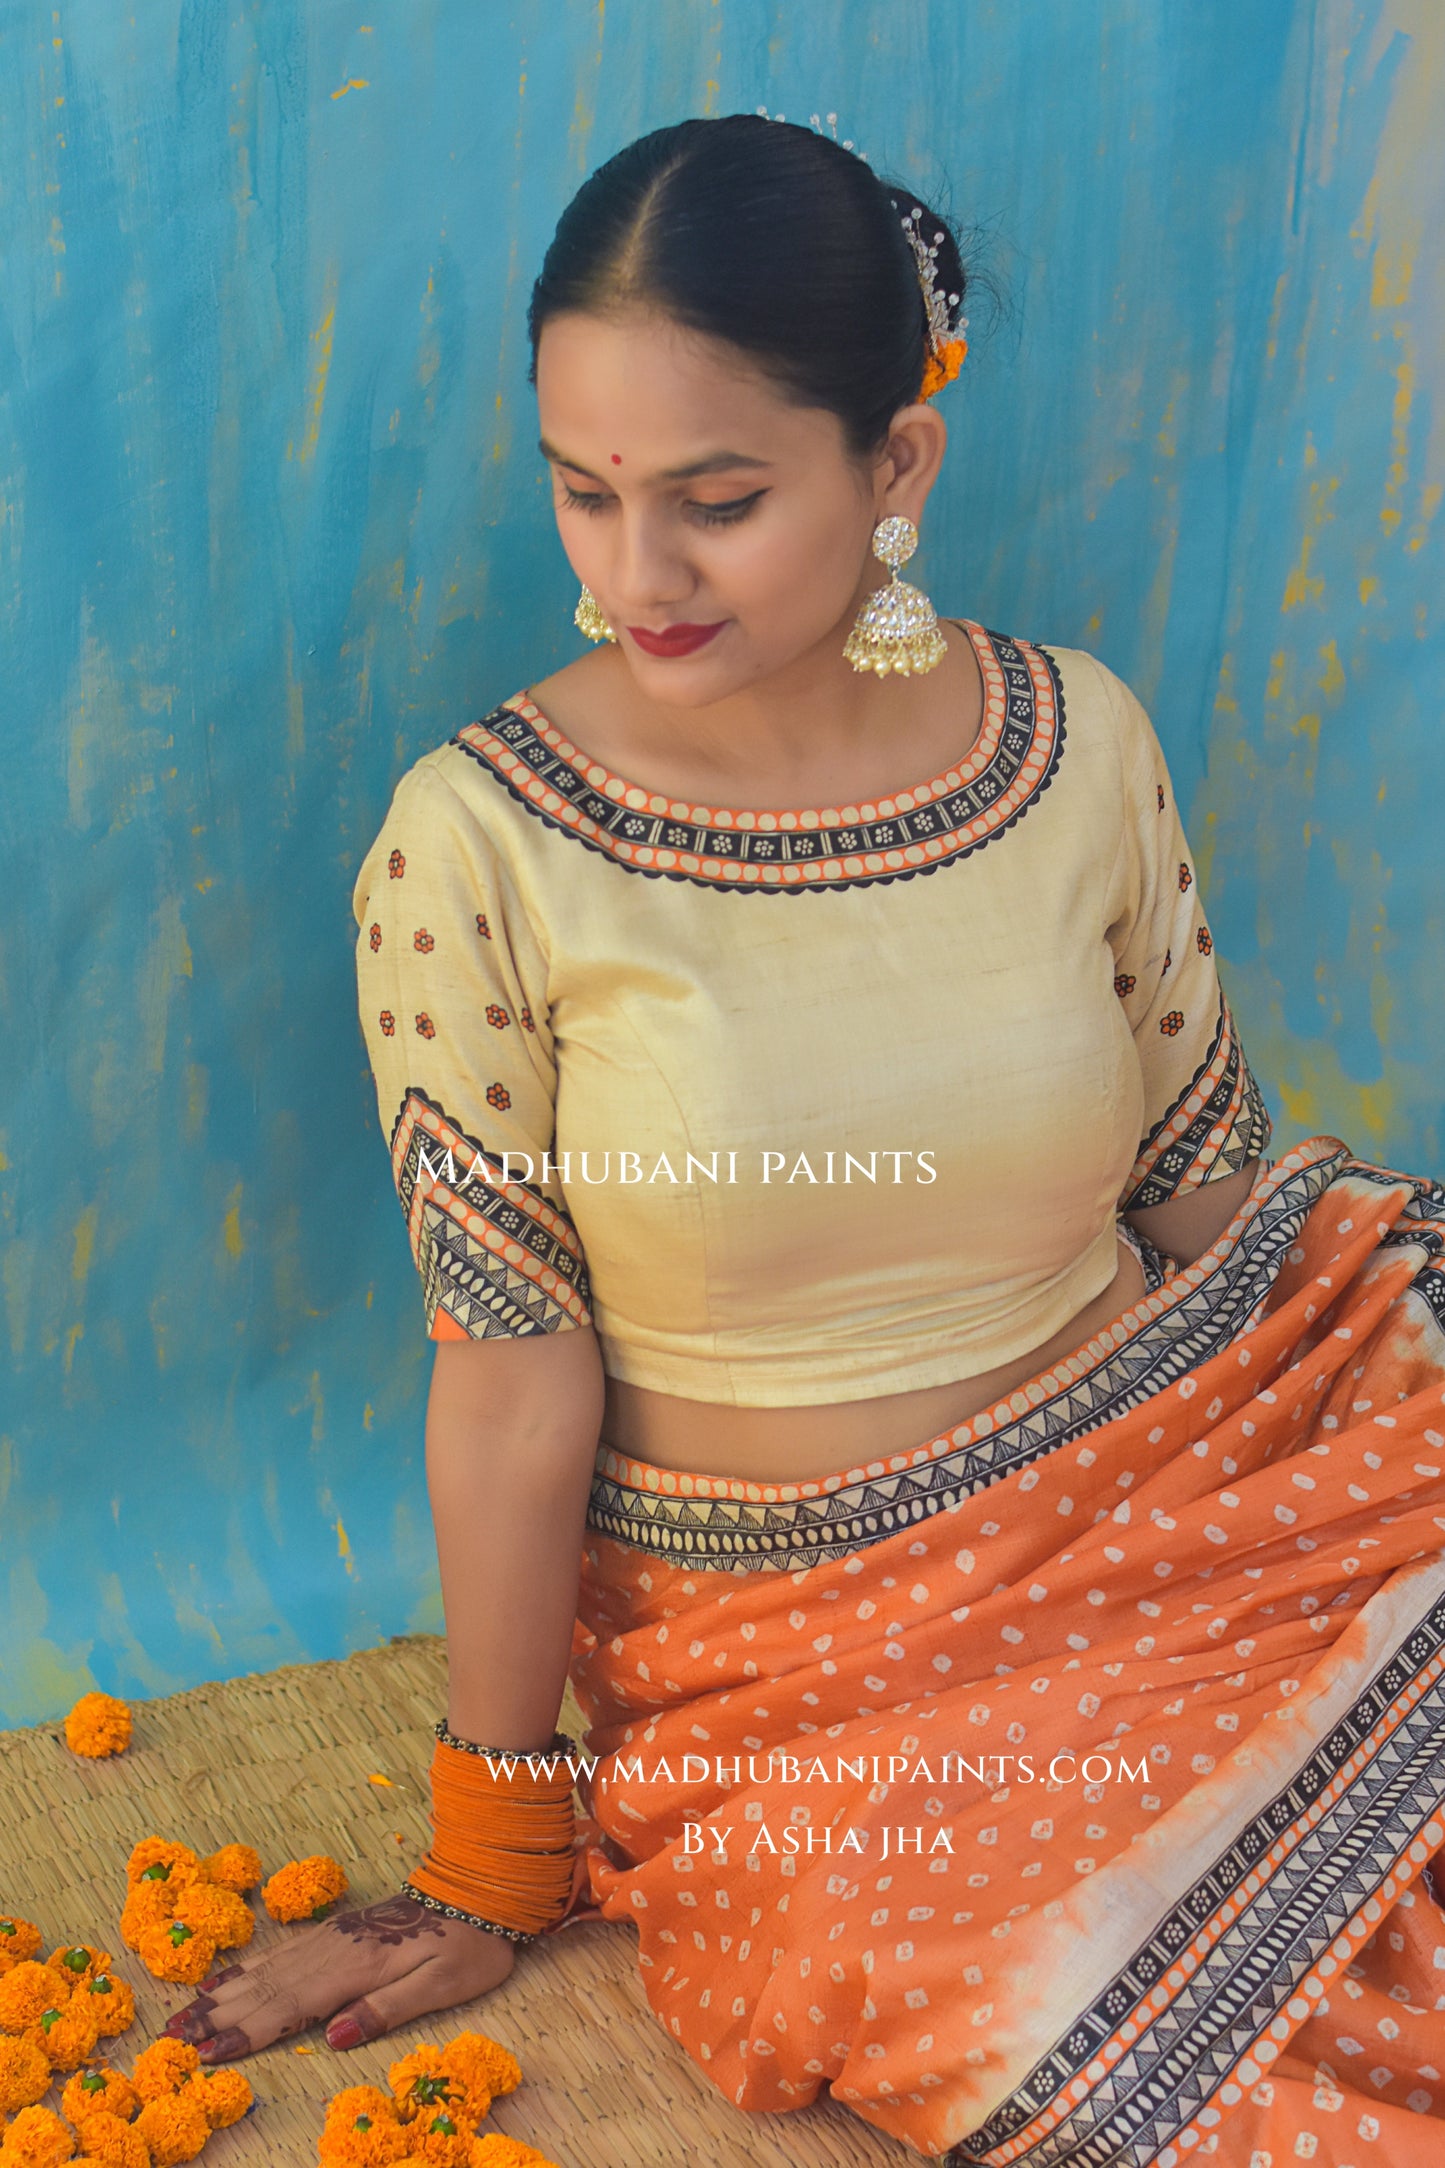 KAMLAKSHI Hand-painted Madhubani Bandhini Tussar Silk Blouse